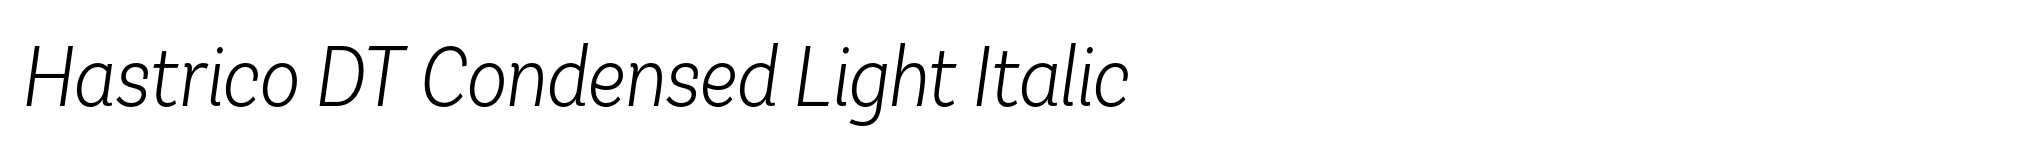 Hastrico DT Condensed Light Italic image